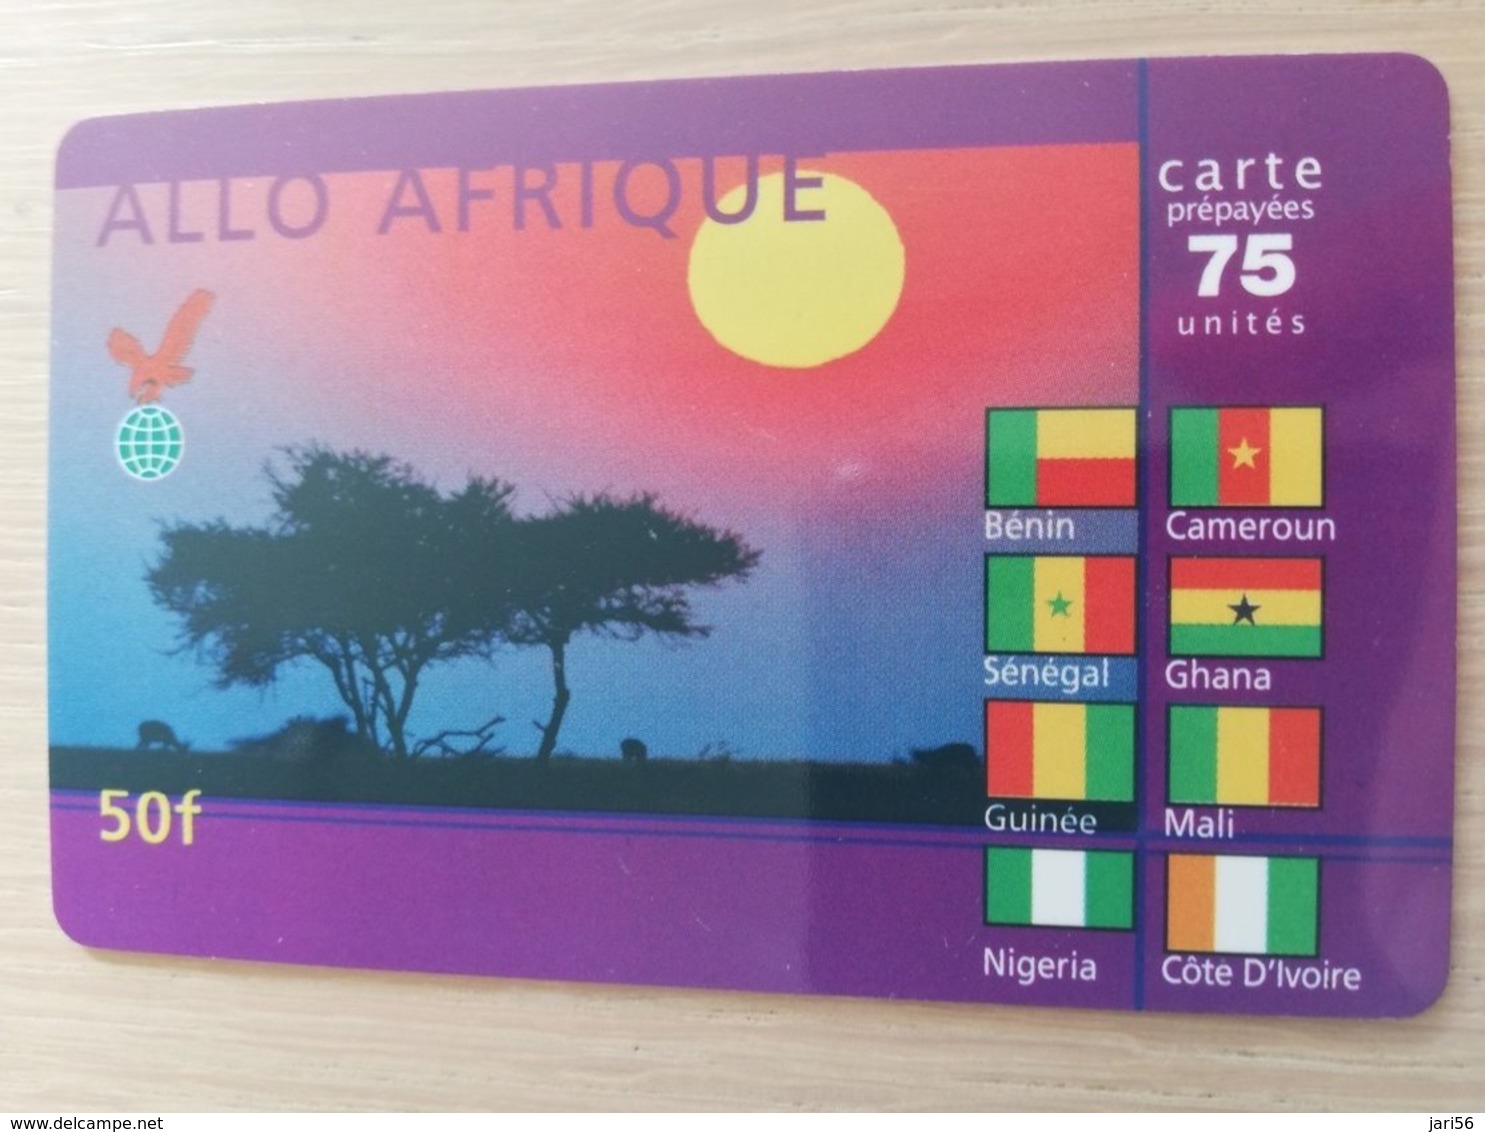 FRANCE/FRANKRIJK  ALLO   AFRICA  75 UNITS PREPAID  USED    ** 1508** - Nachladekarten (Handy/SIM)